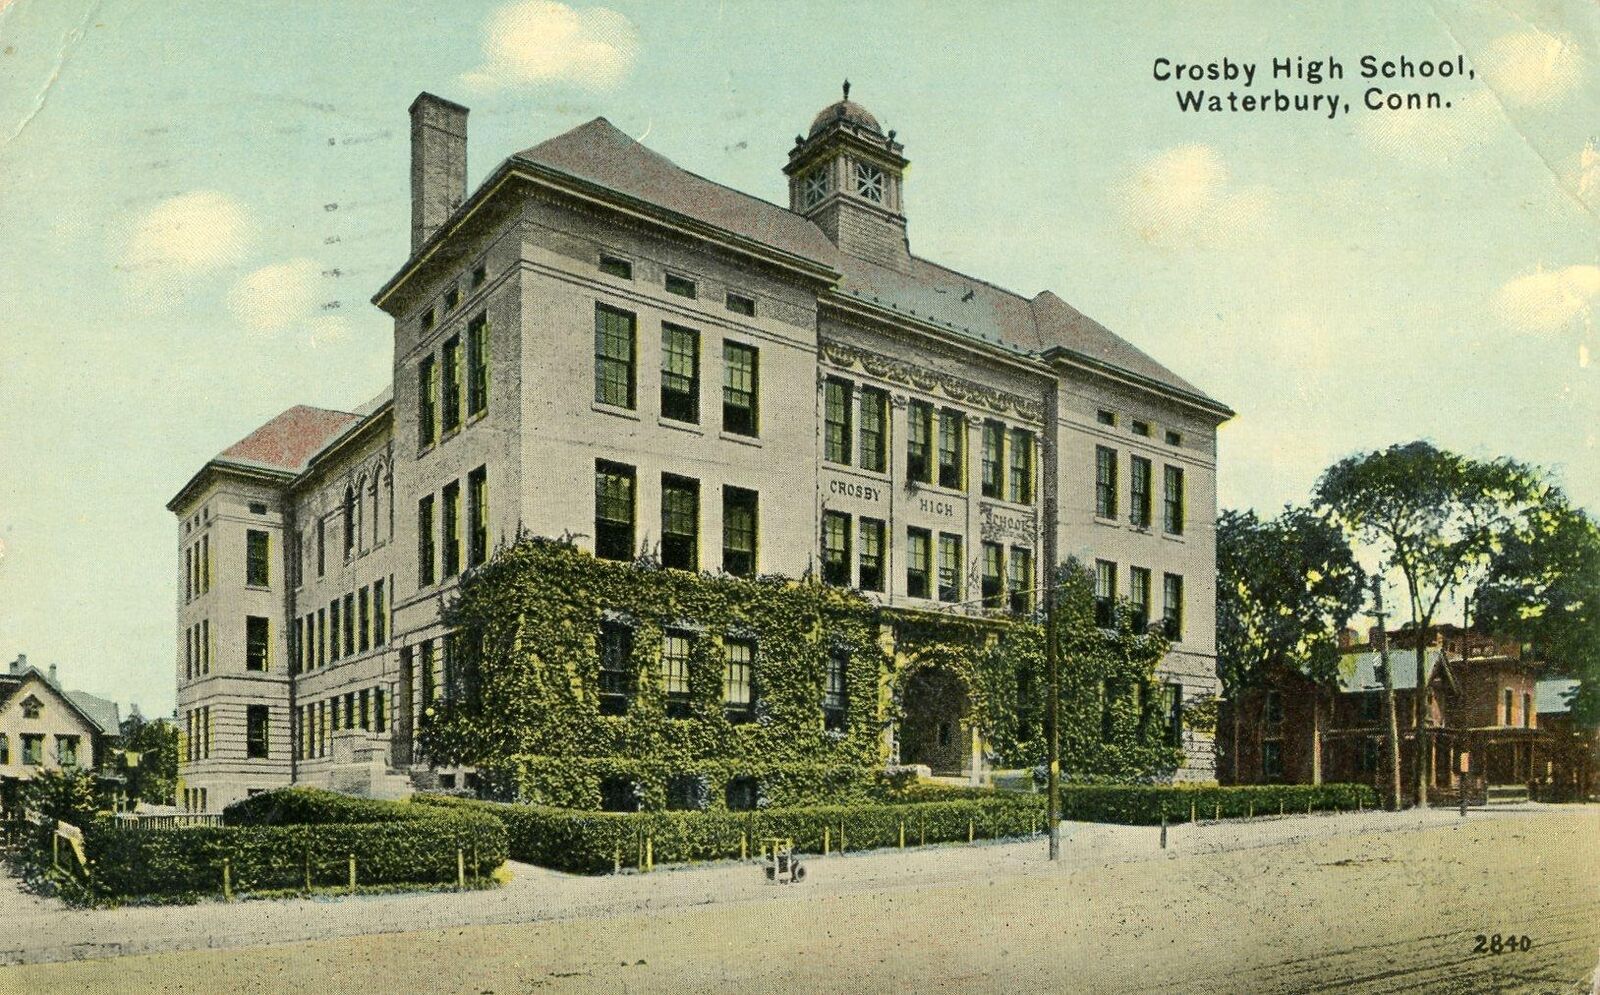 1913 WATERBURY CONNECTICUT*CT*CROSBY HIGH SCHOOL*TO BIDDEFORD MAINE*CONLAN